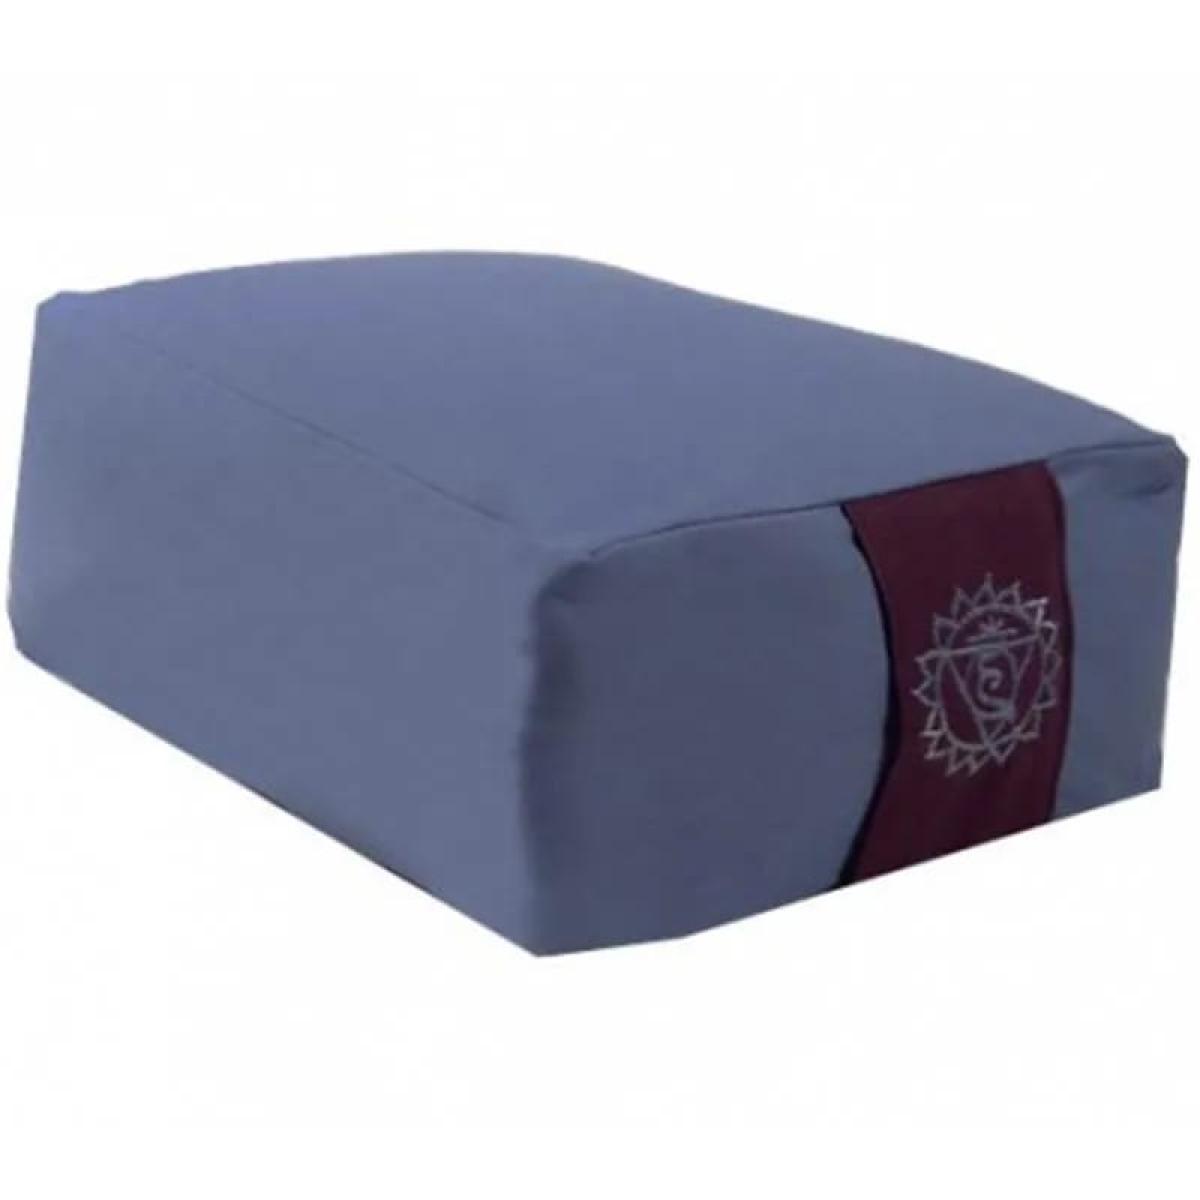 Rectangular Yogi & Yogini Meditation Cushion - Blue ➤ www.bokken-shop.de. Yoga cushion ✓ 100% organic cotton. Your meditation specialist shop!